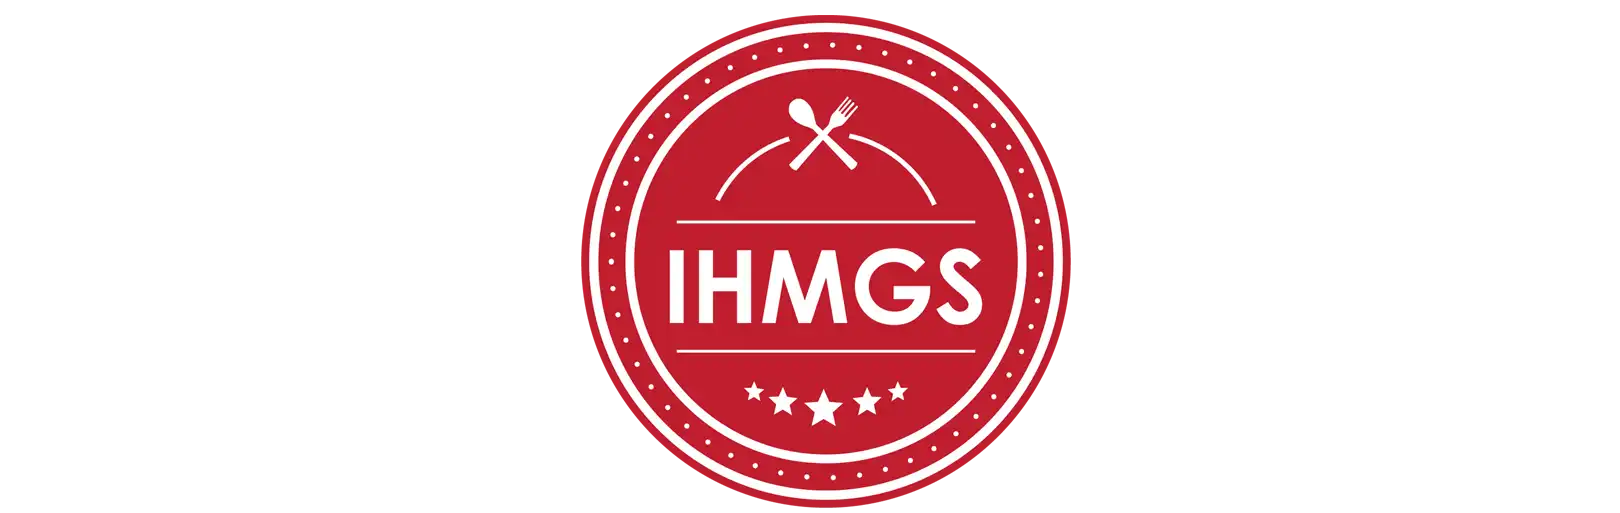 ihmgs - International Hotel Management Gastronomy School